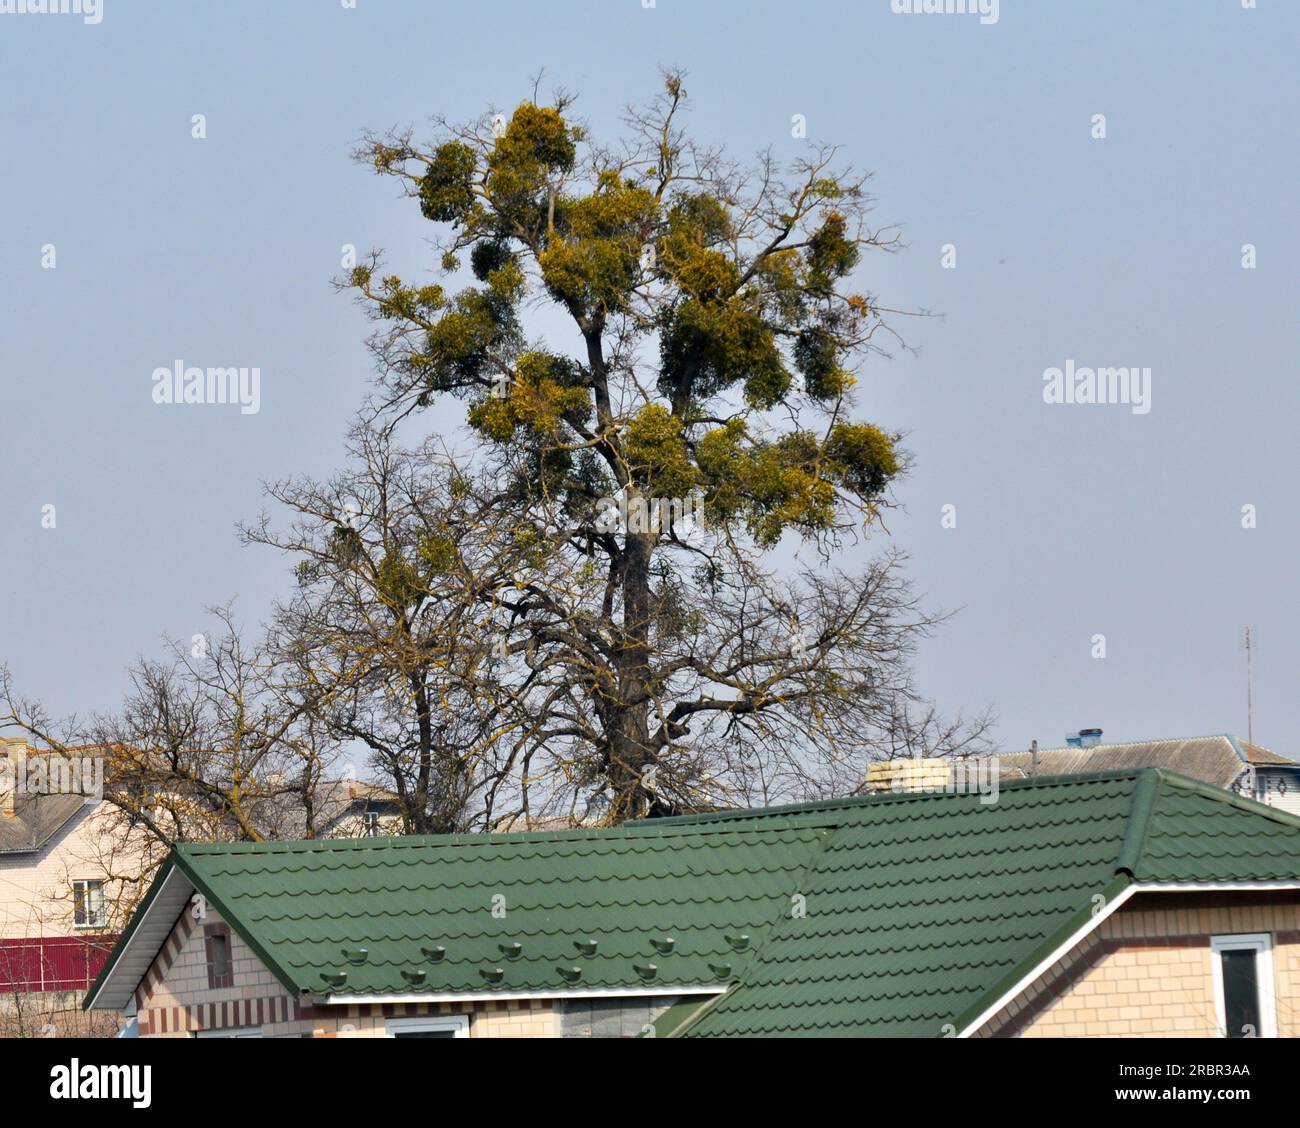 In nature, mistletoe (Viscum album) parasitizes on the tree Stock Photo